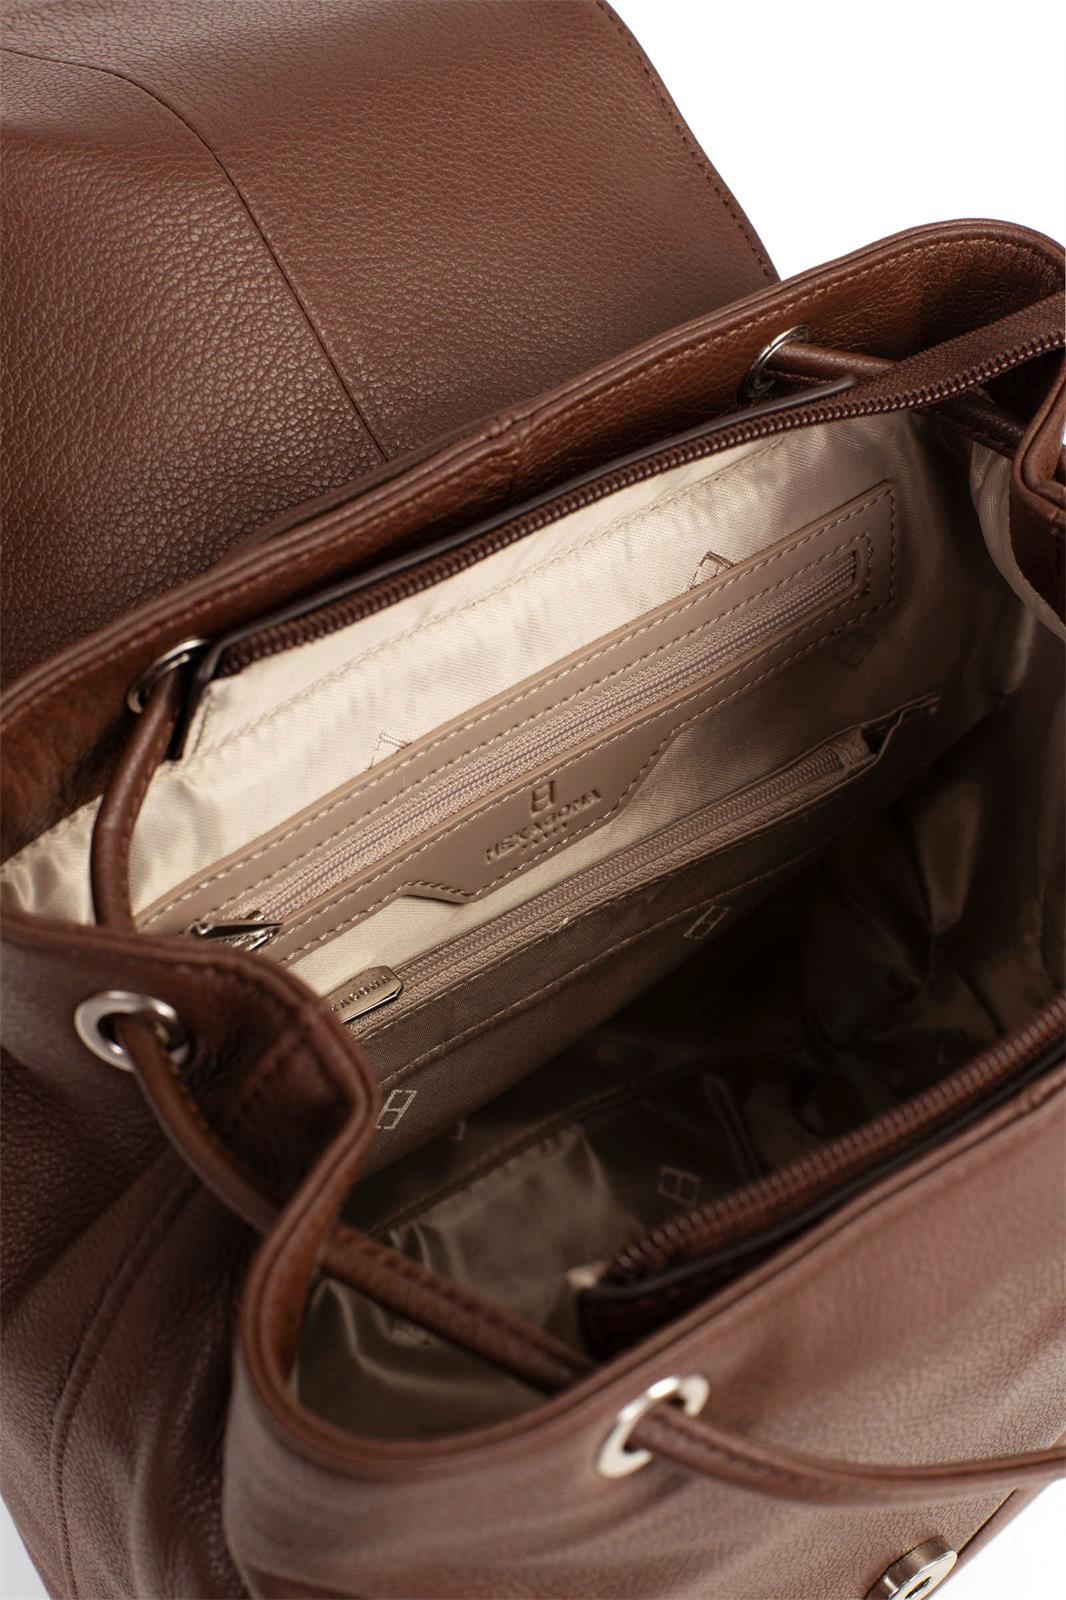 Rucksack - Laure Bags and Travel